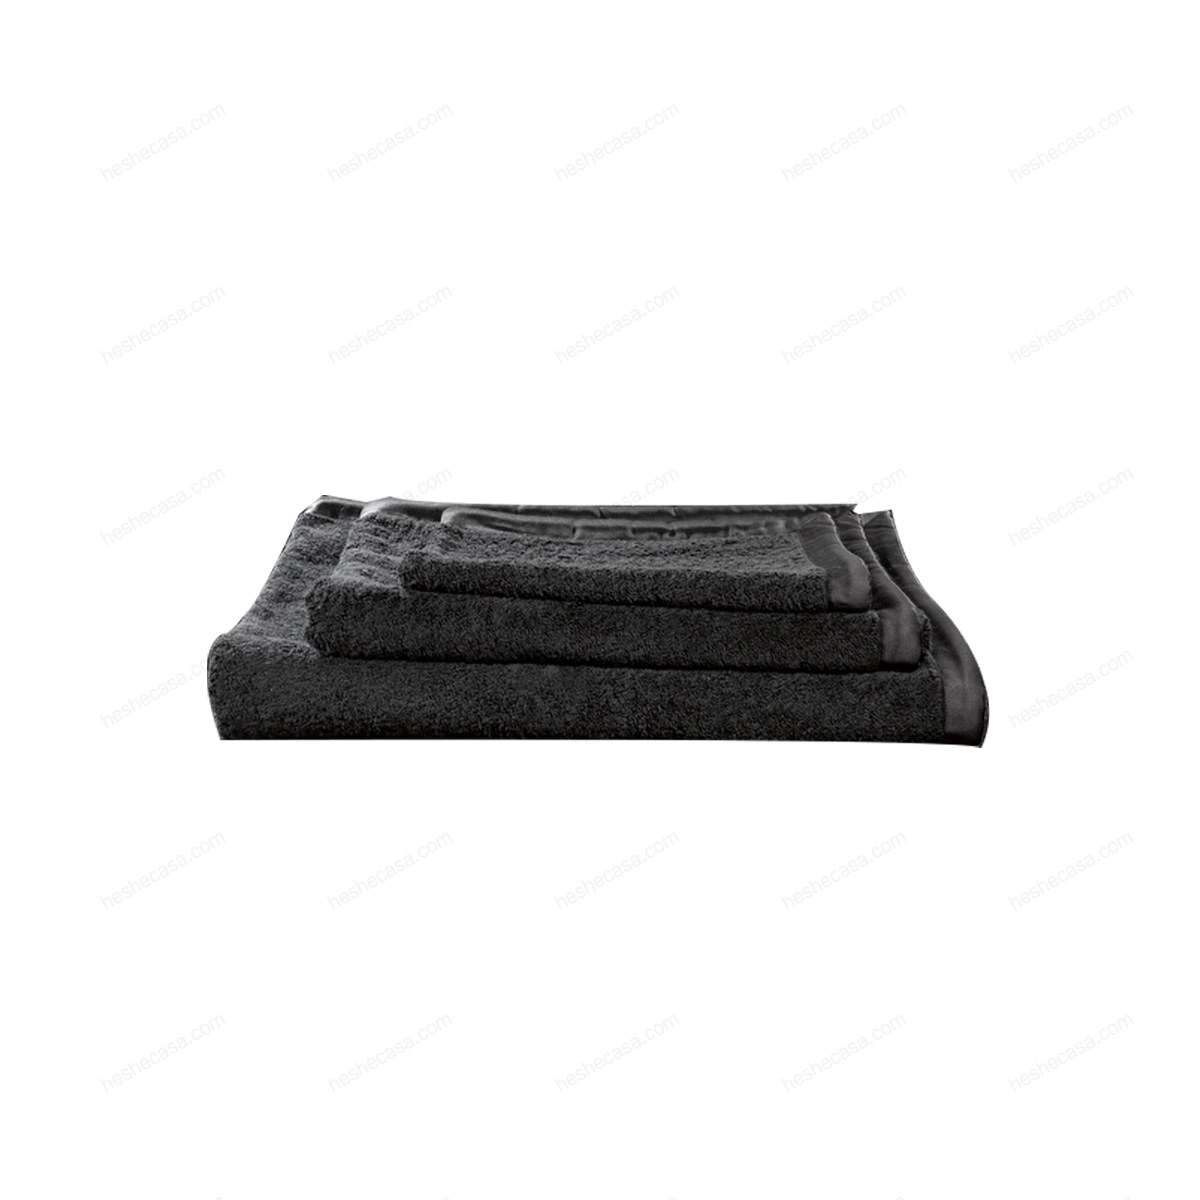 Coco Black - Shower towel 毛巾/浴巾